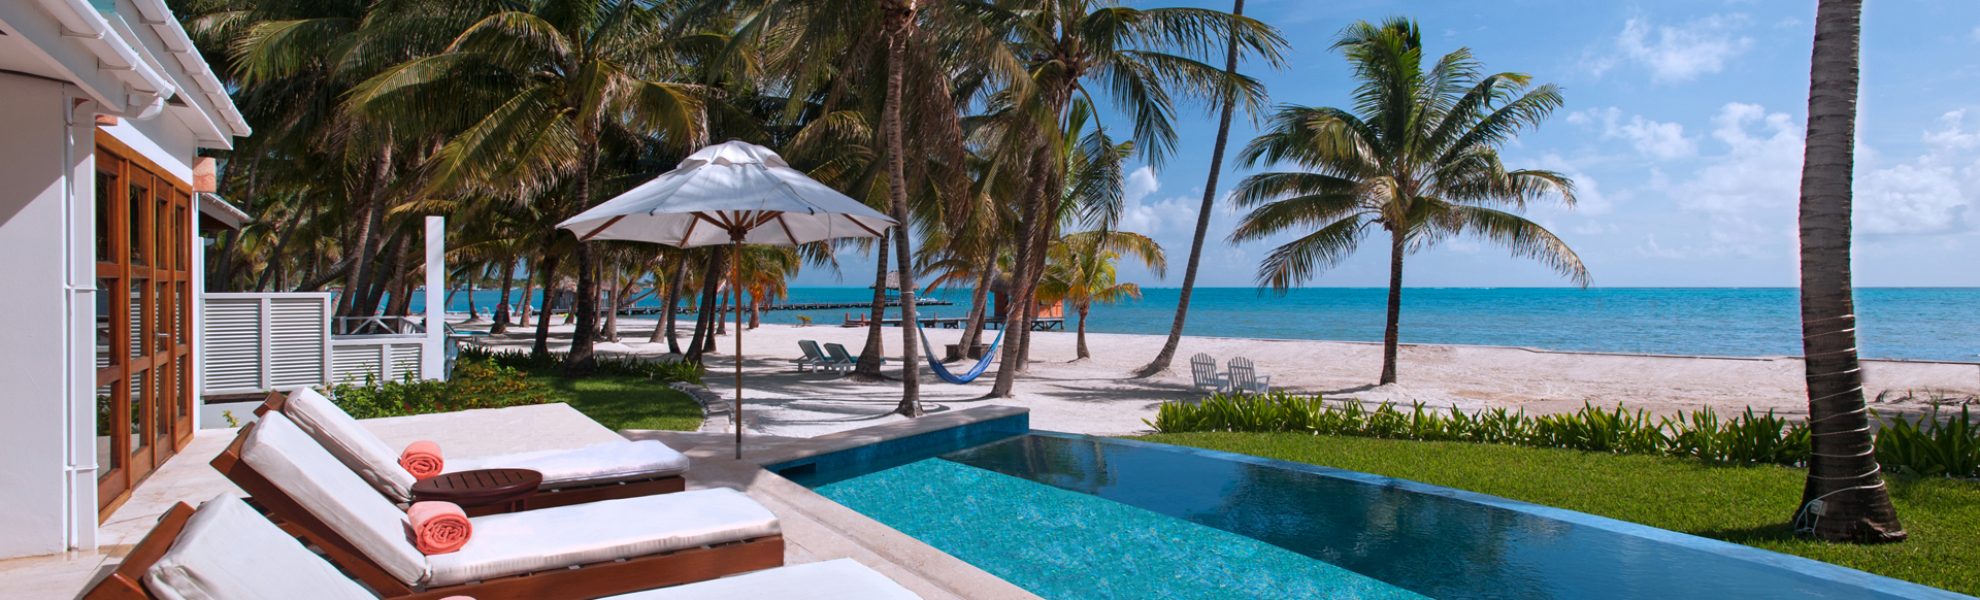 Infinity pool at Casa Playa Blanca overlooking Caribbean Sea at Victoria House Resort and Spa, Belize